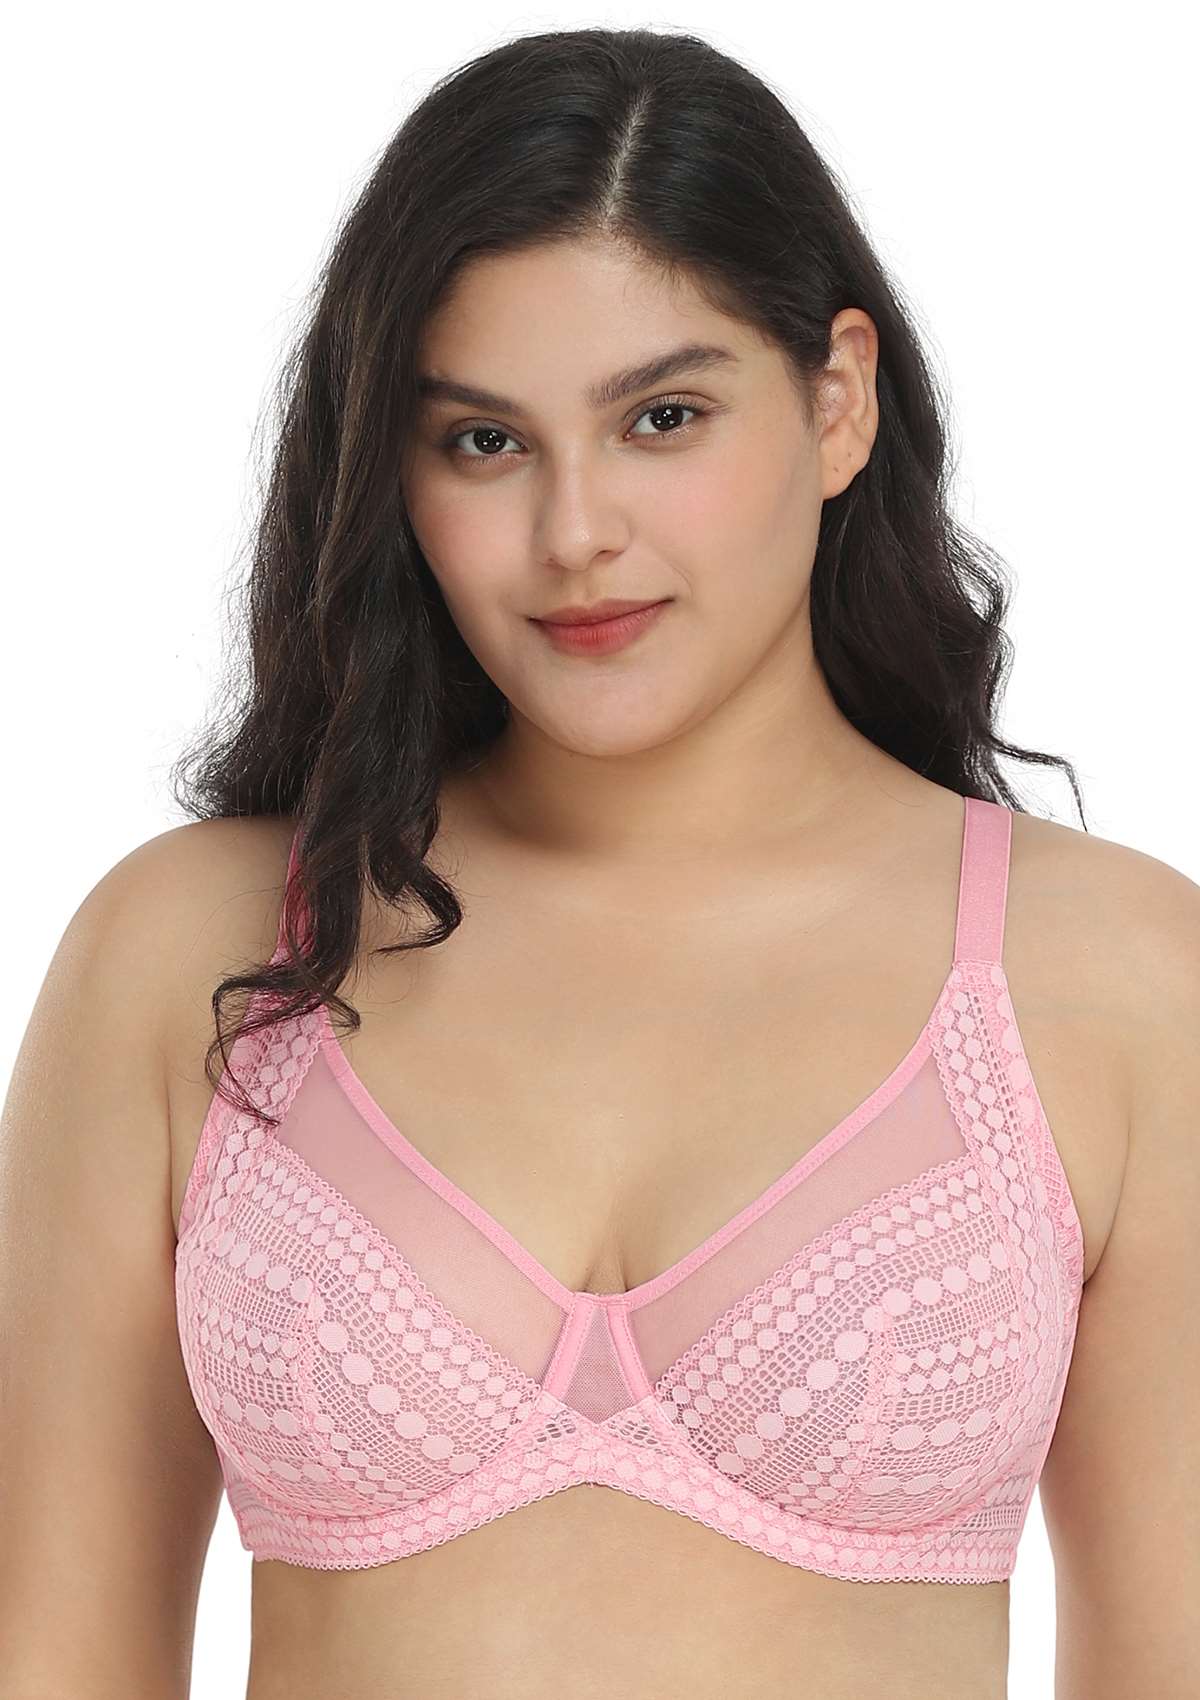 HSIA Heroine Lace Unlined Bra: Bra That Hides Back Fat - Plus Size - Pink / 40 / D